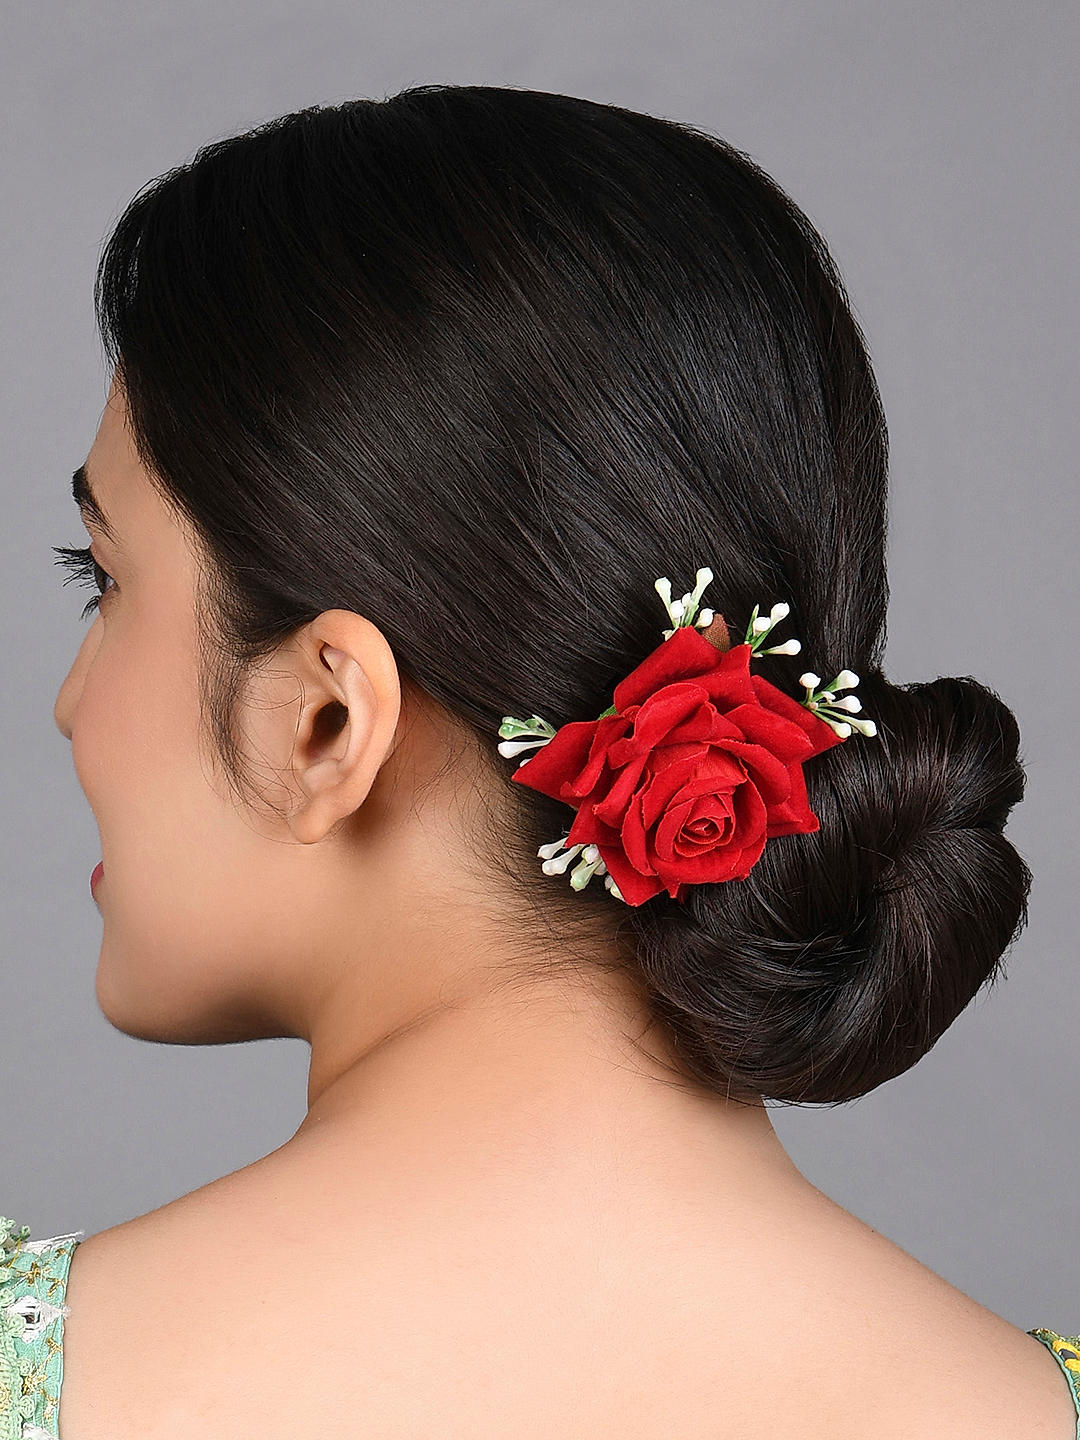 Top more than 161 flower hair pins for weddings